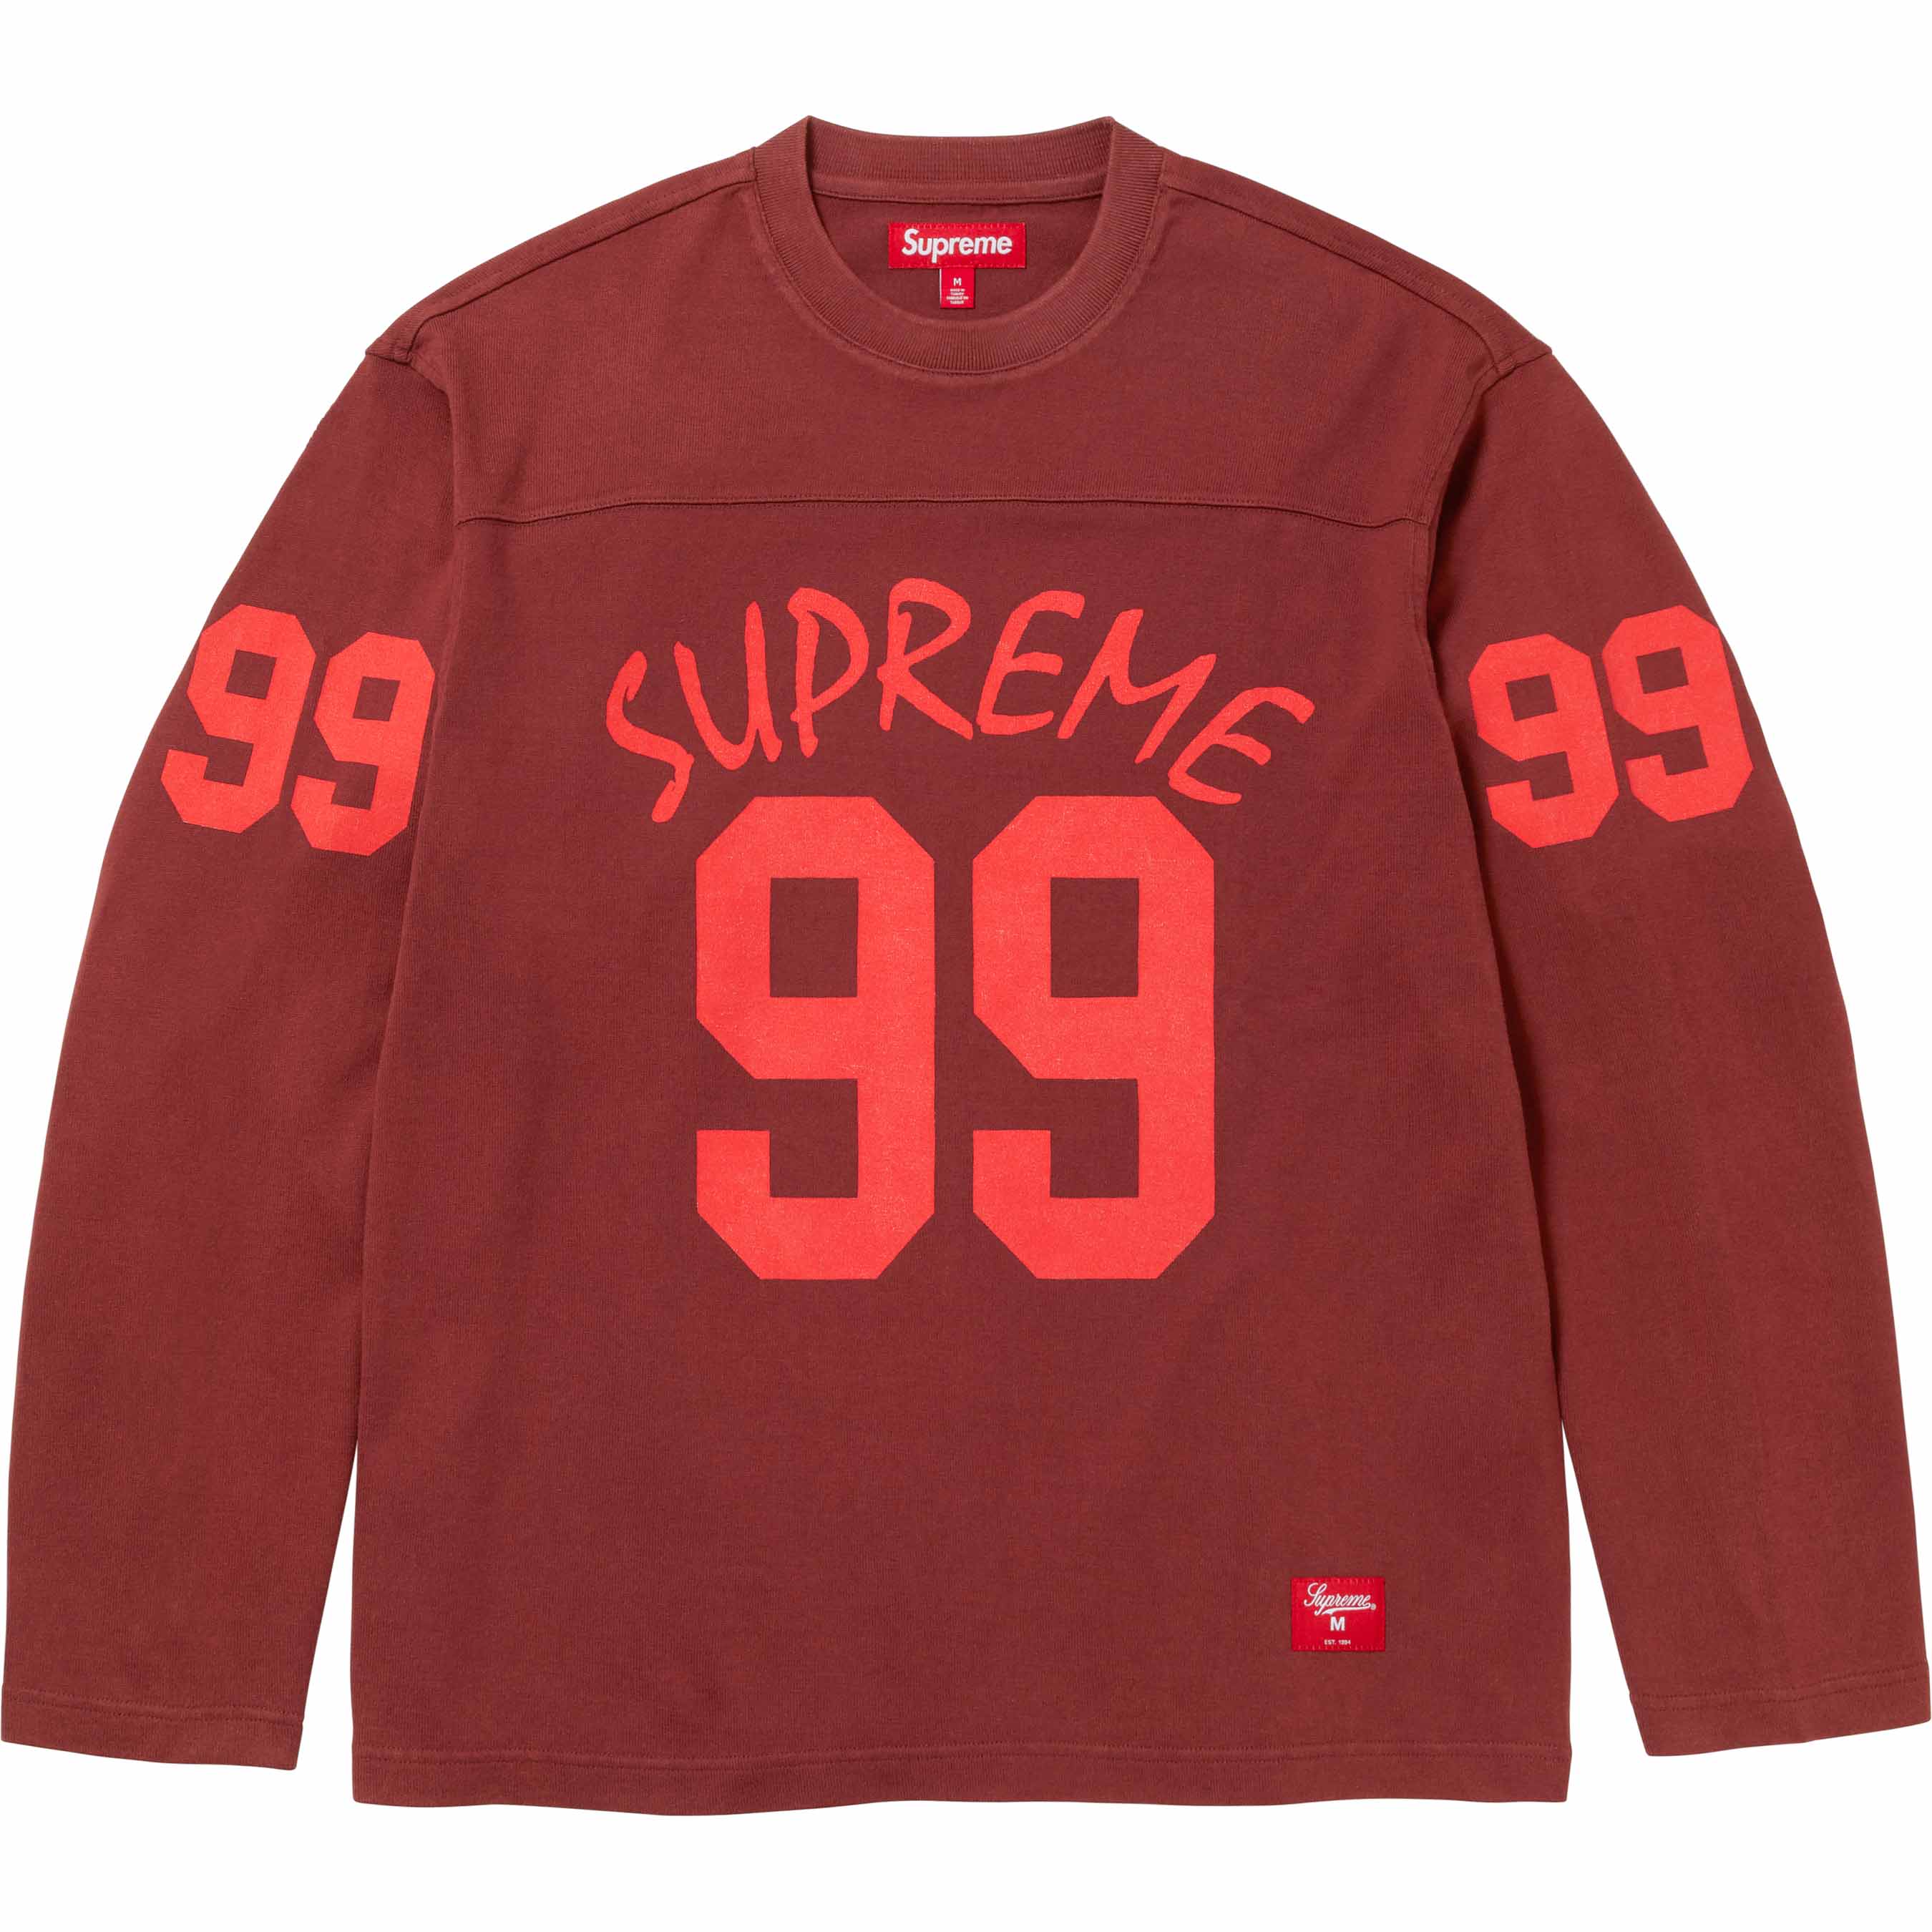 Supreme 99 L/S Football Top Stone XLsupreme